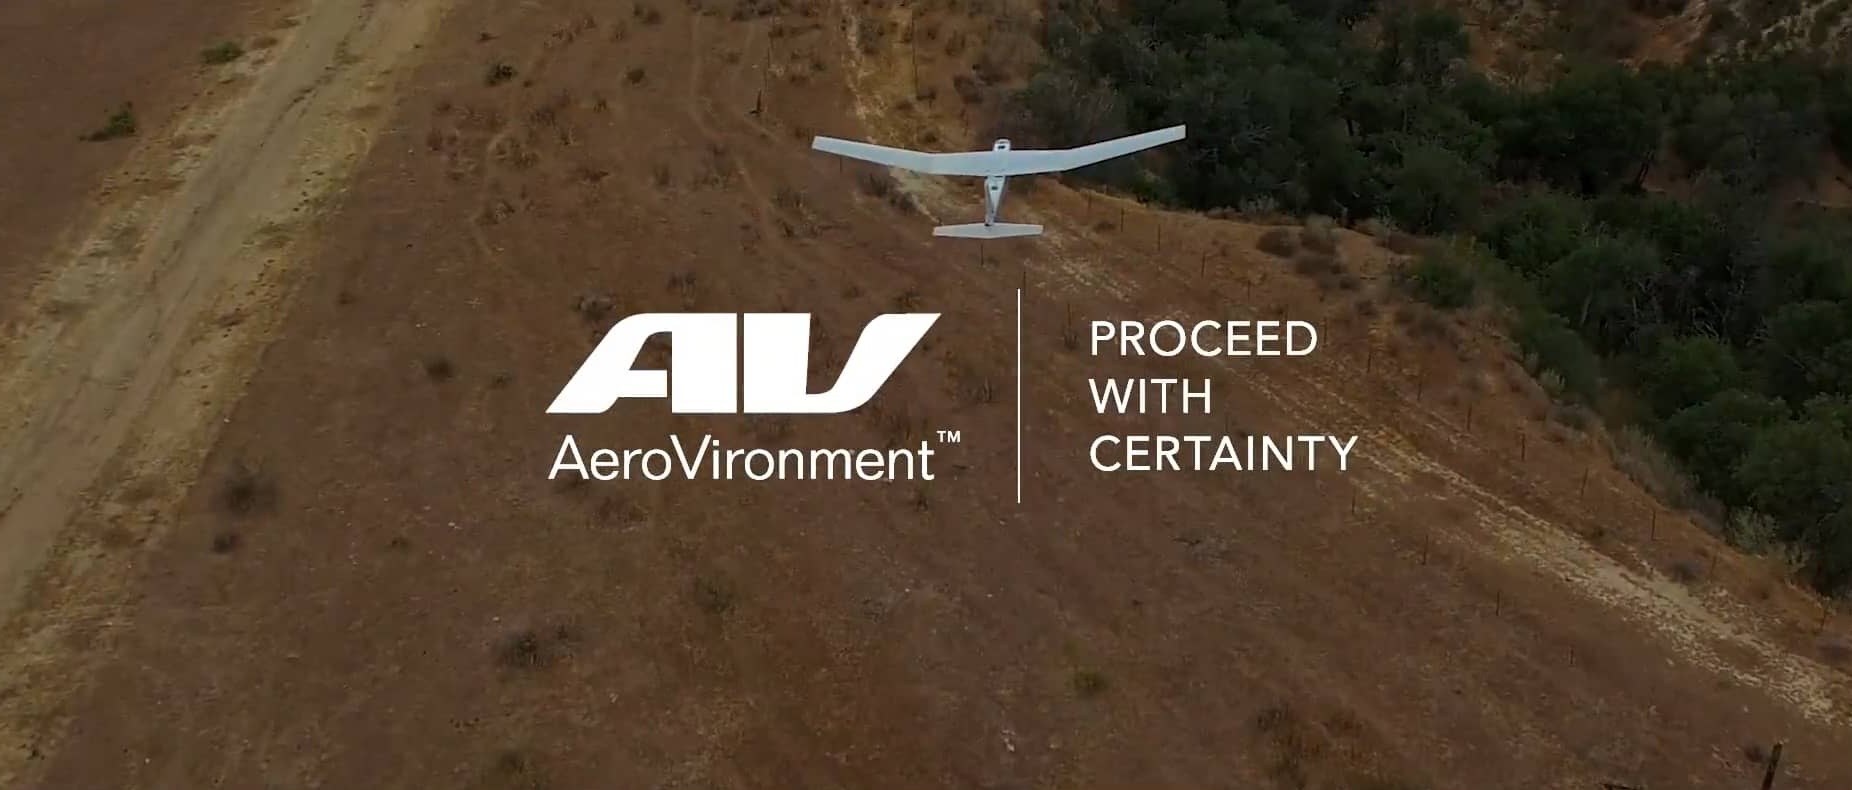 AeroVironment acquires VTOL UAS developer Pulse Aerospace LLC for 25.7 million